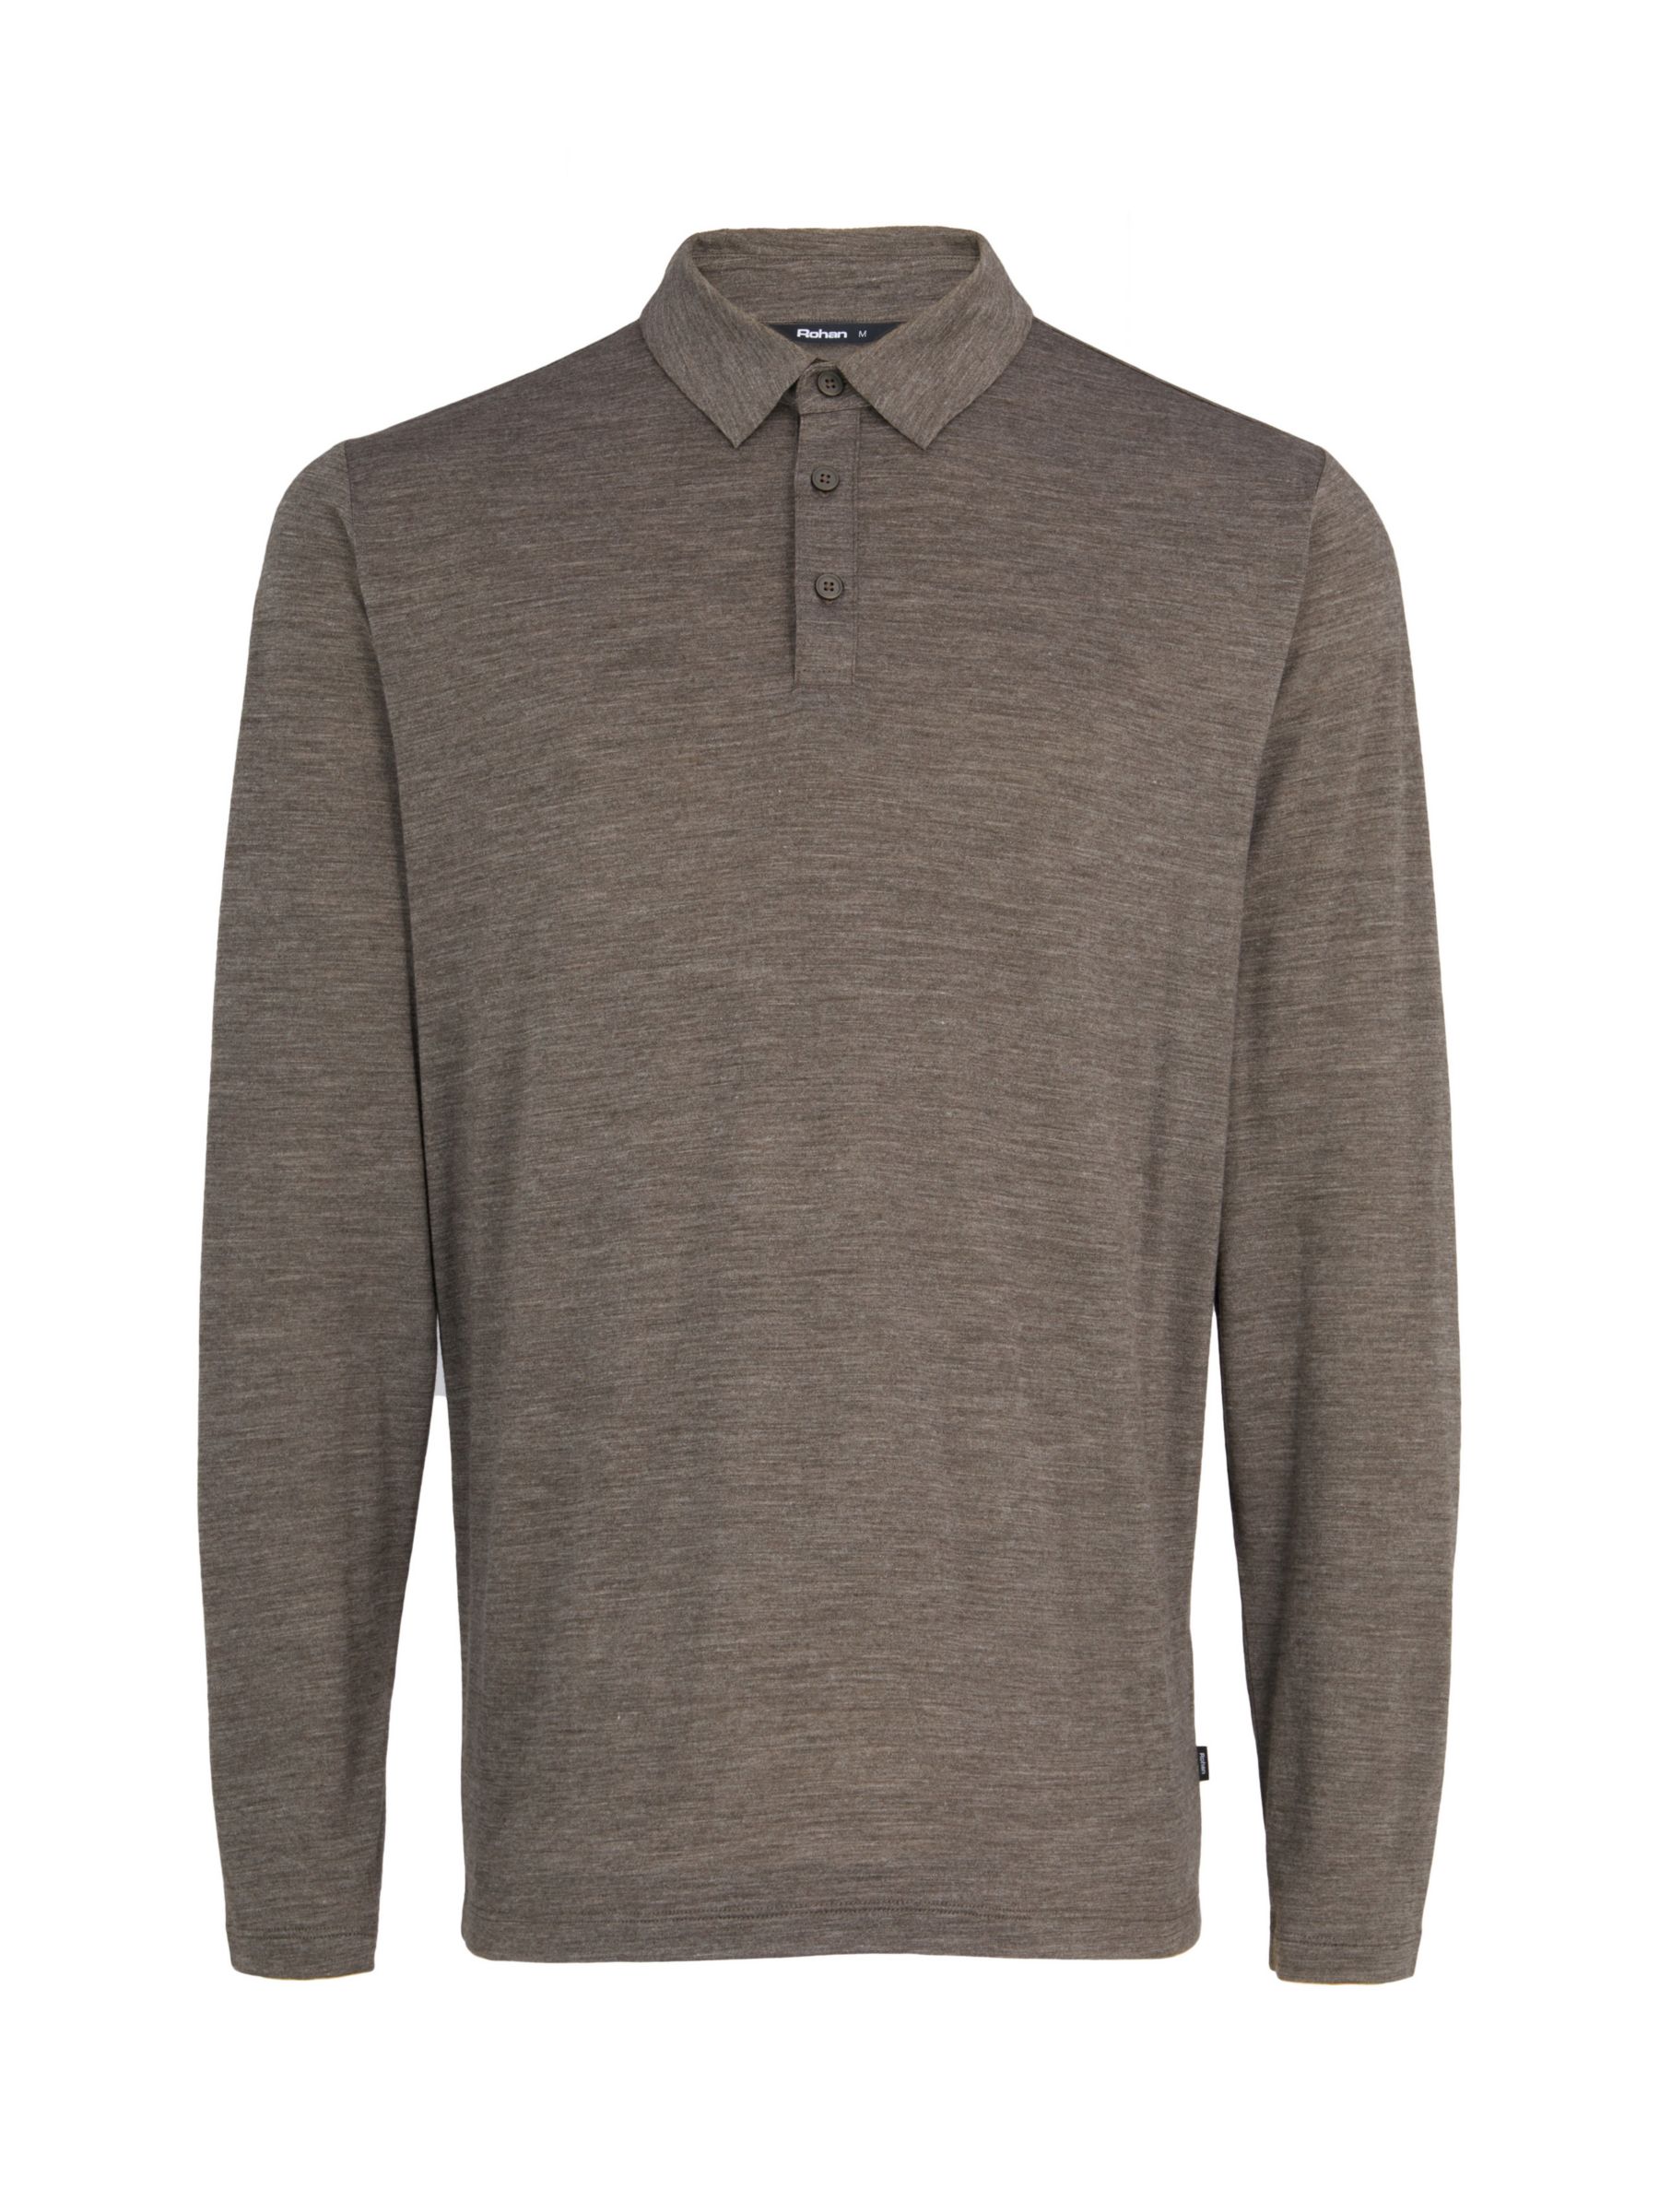 Rohan Merino Cool Long Sleeve Polo Shirt at John Lewis & Partners